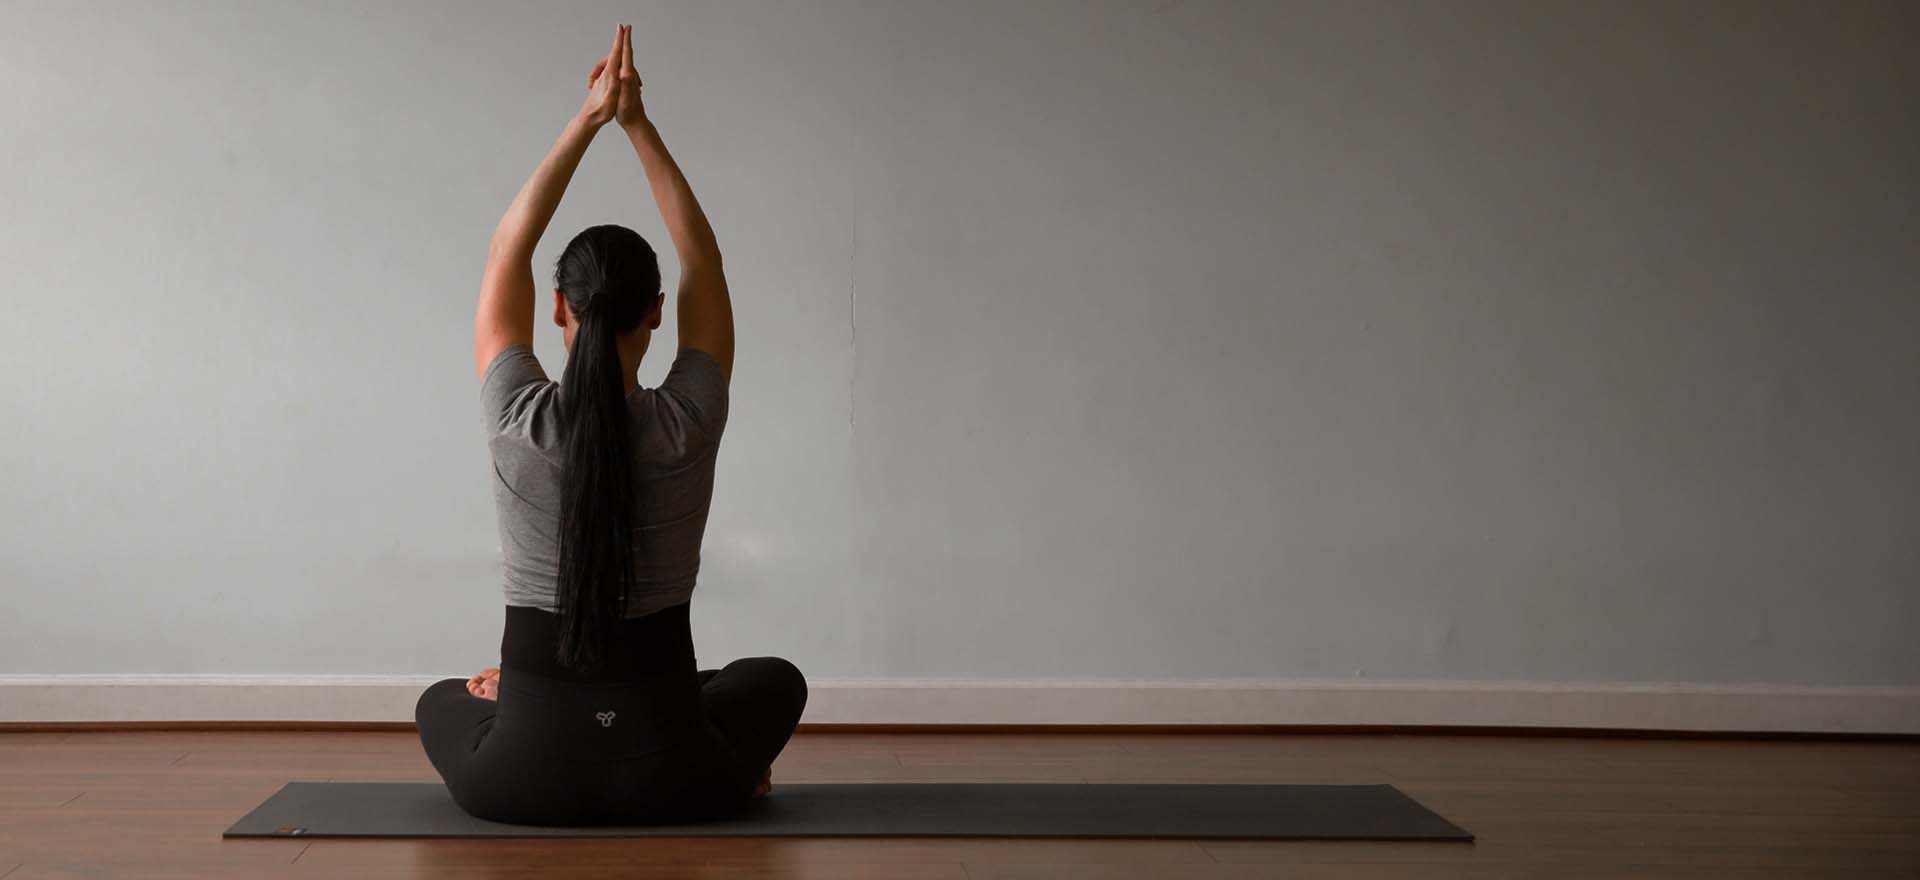 Open Door Yoga – Open Door Yoga offers yoga classes 7 days a week at 3  convenient locations in East Vancouver